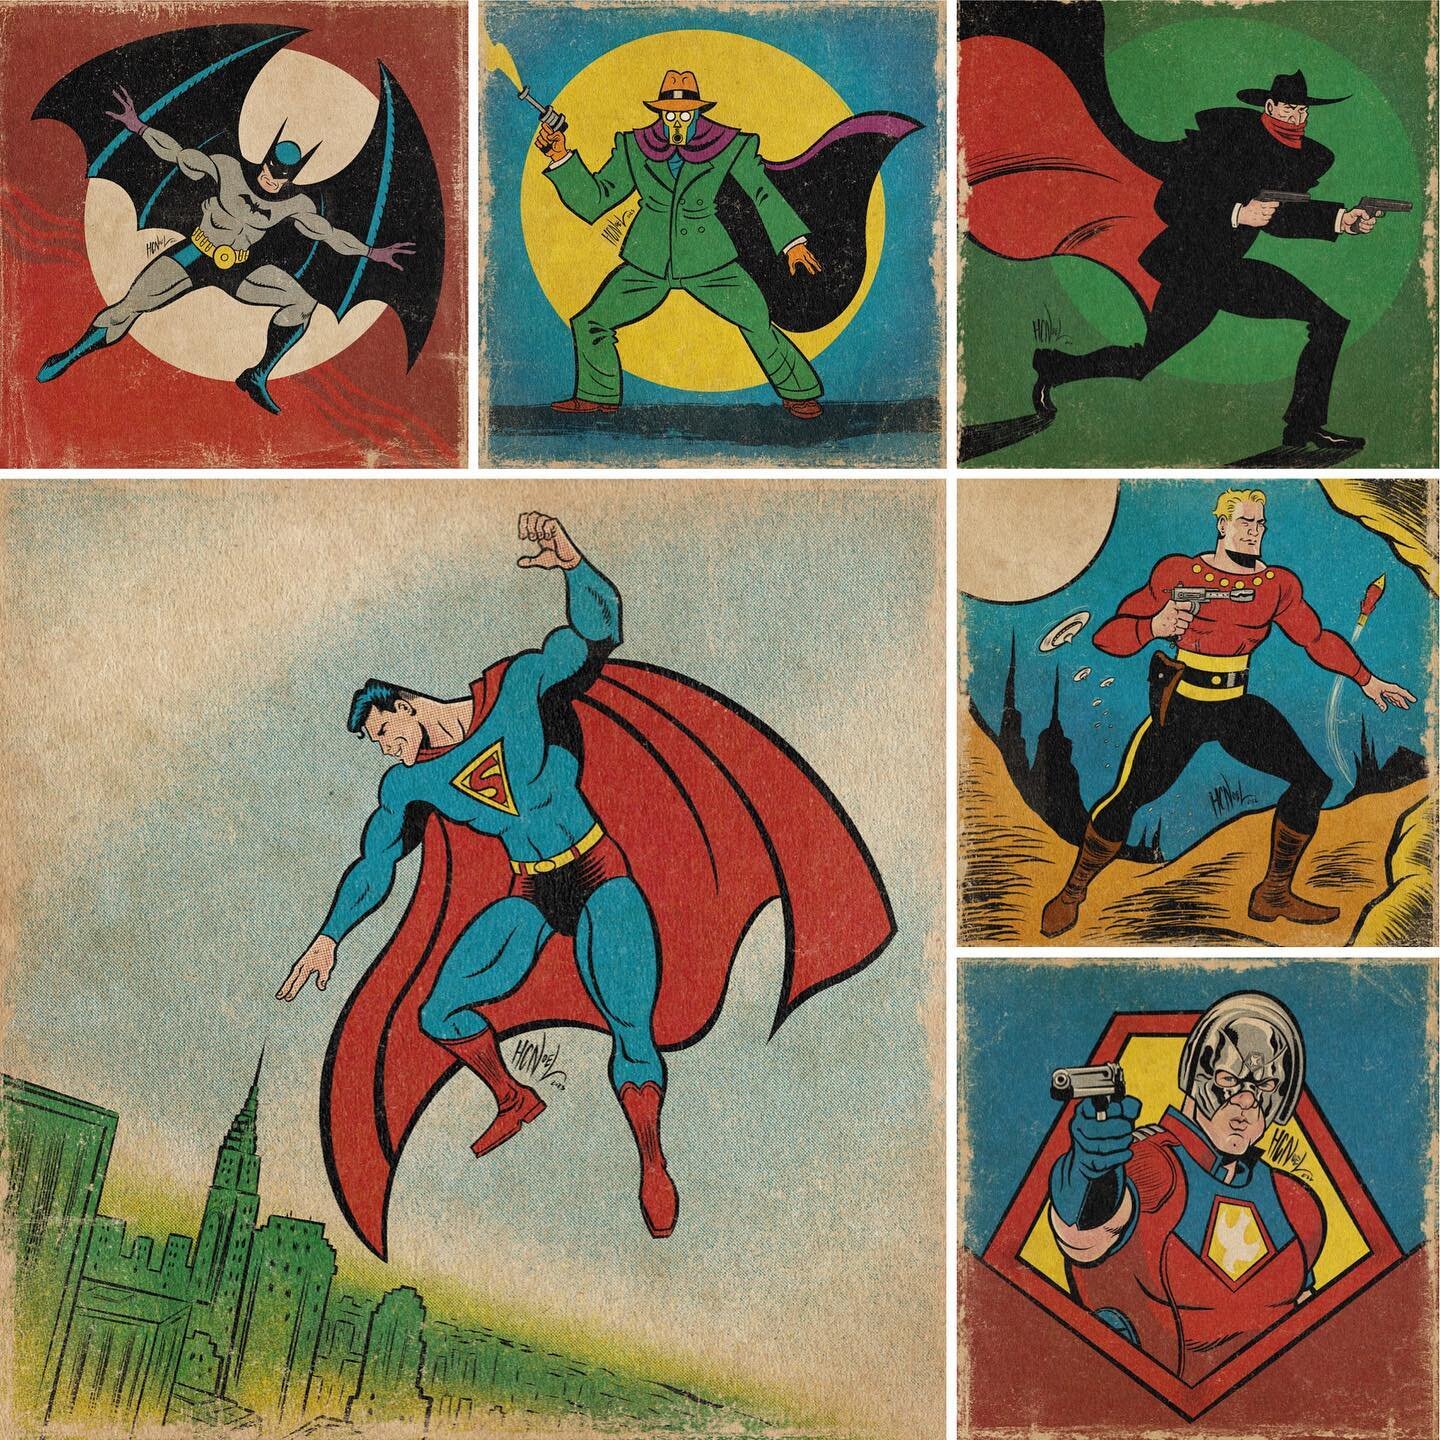 Happy National Superhero Day!
What hero is your favorite?
.
.
.
.
#nationalsuperheroday #drawinginmystyle #collage #superman #batman #superheroes